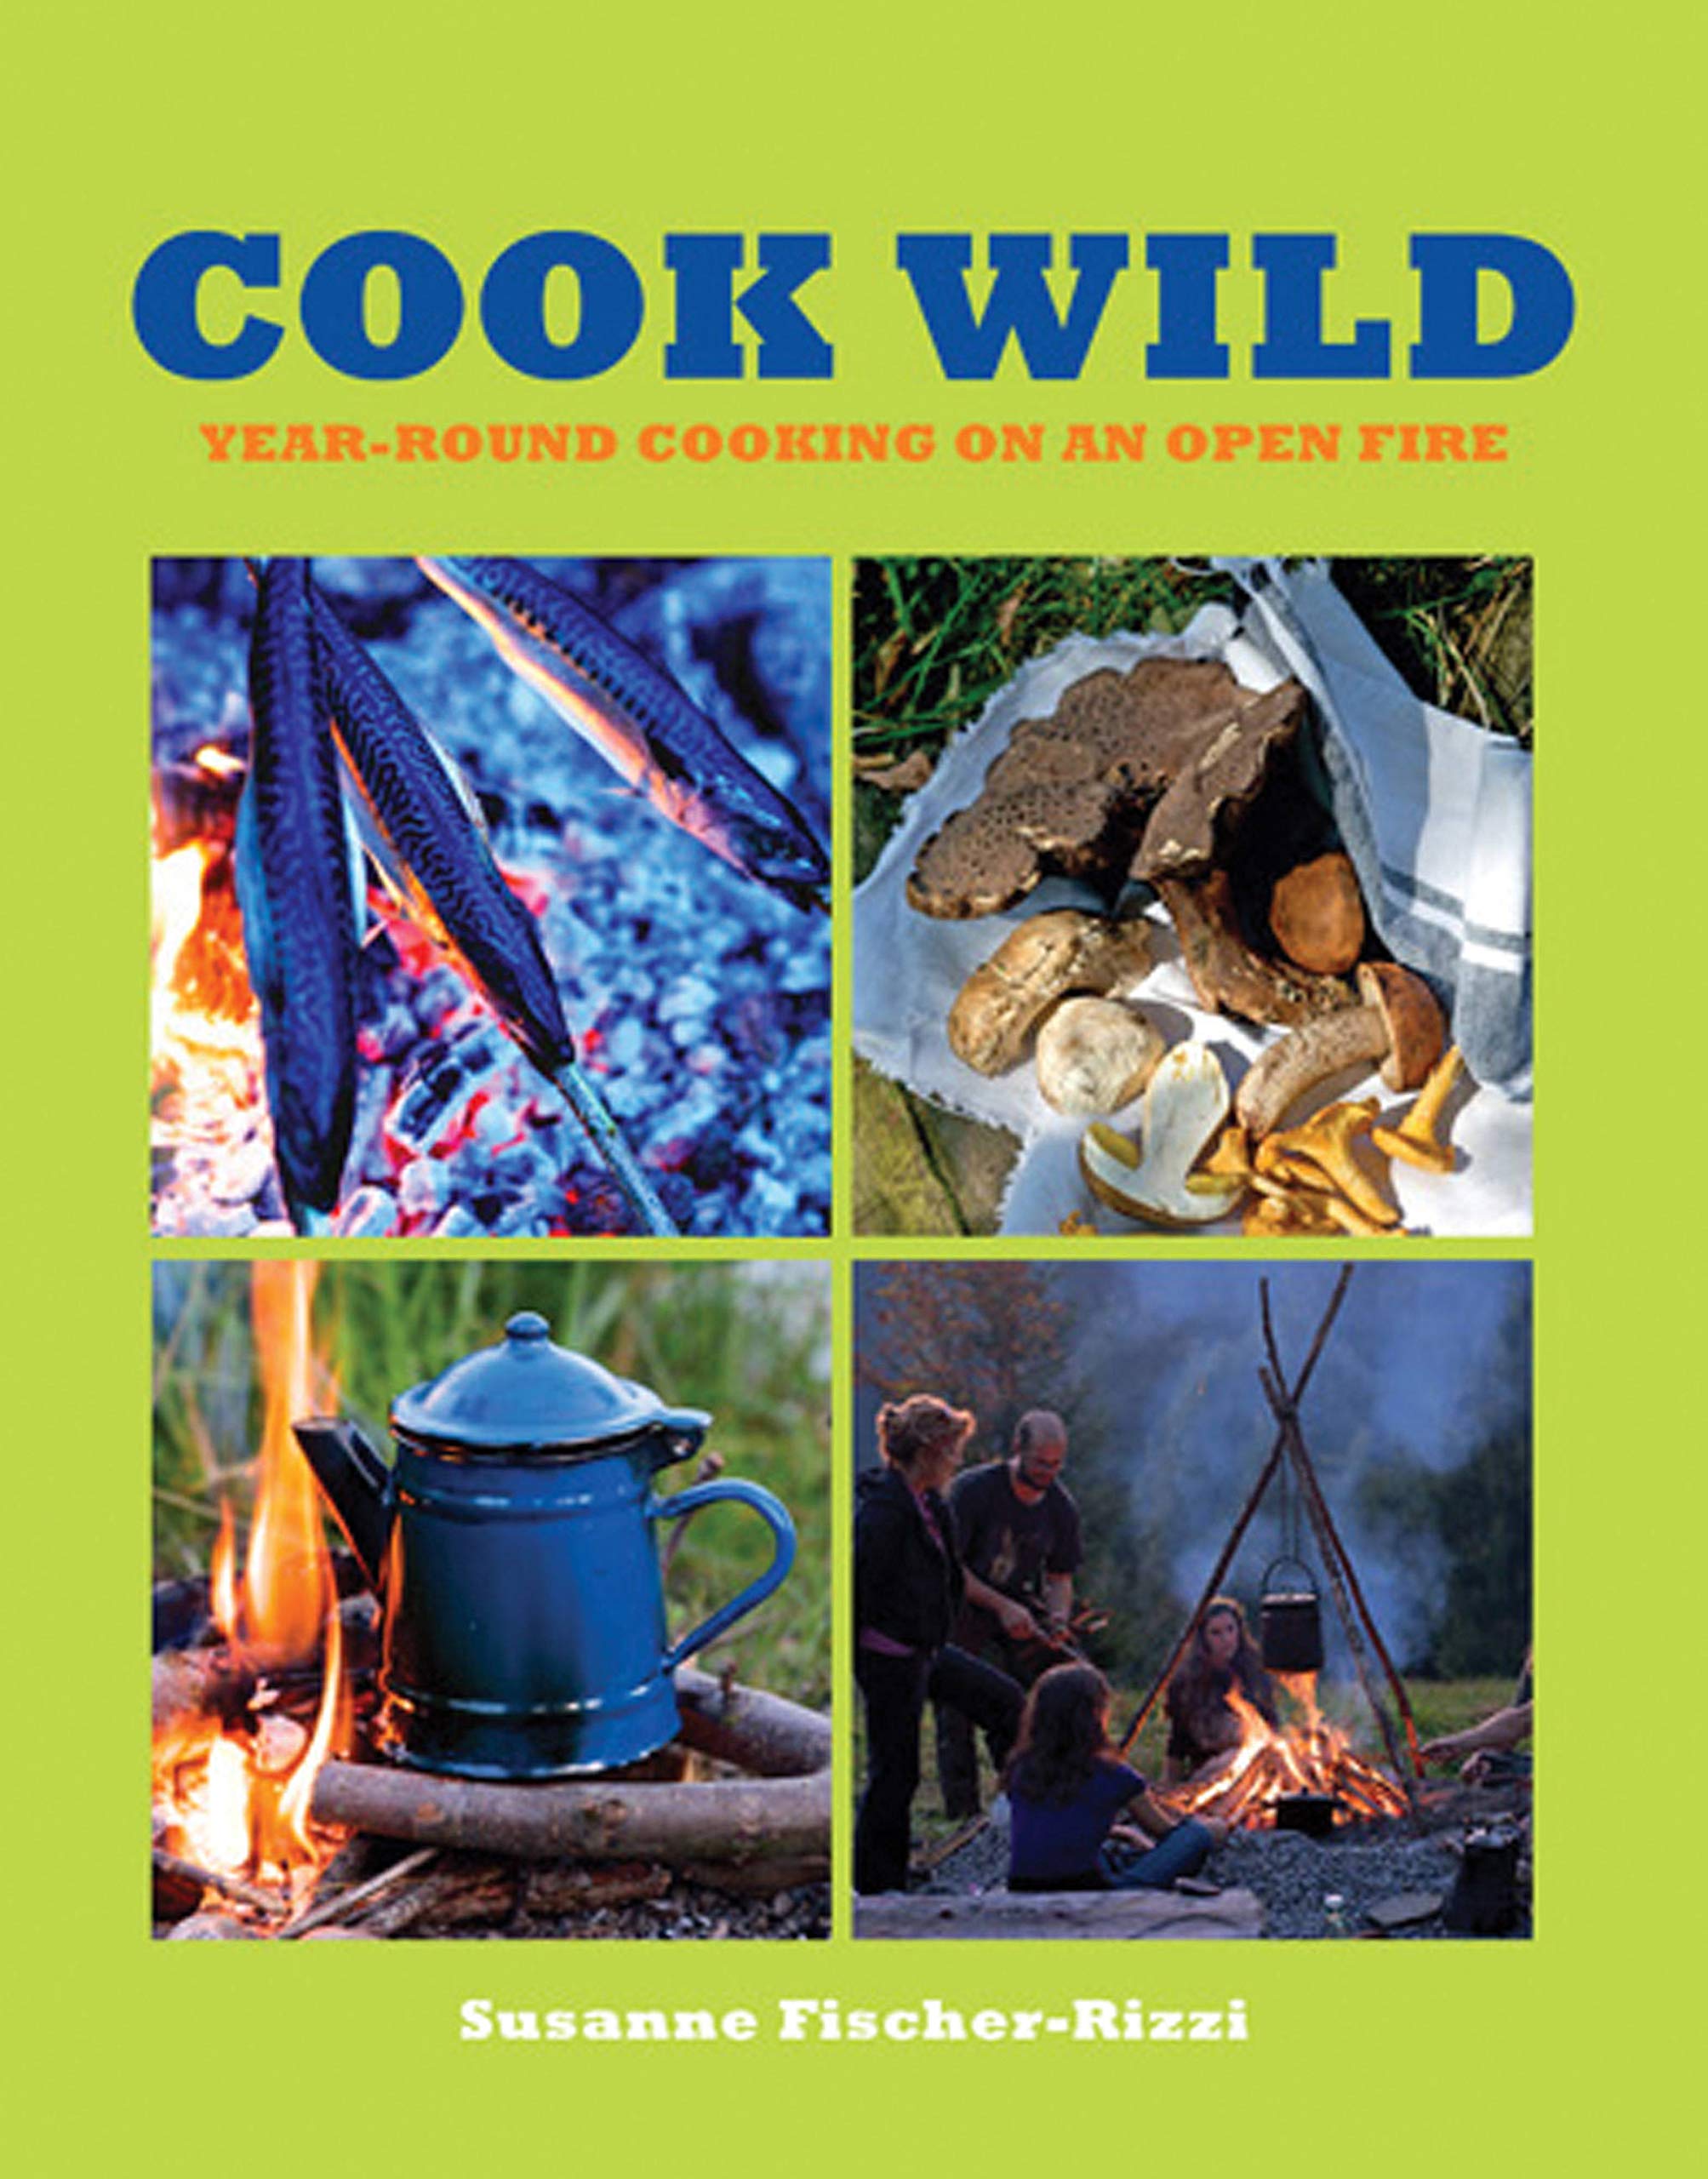 Cook Wild: Year-Round Cooking on an Open Fire (Susanne Fischer-Rizzi)